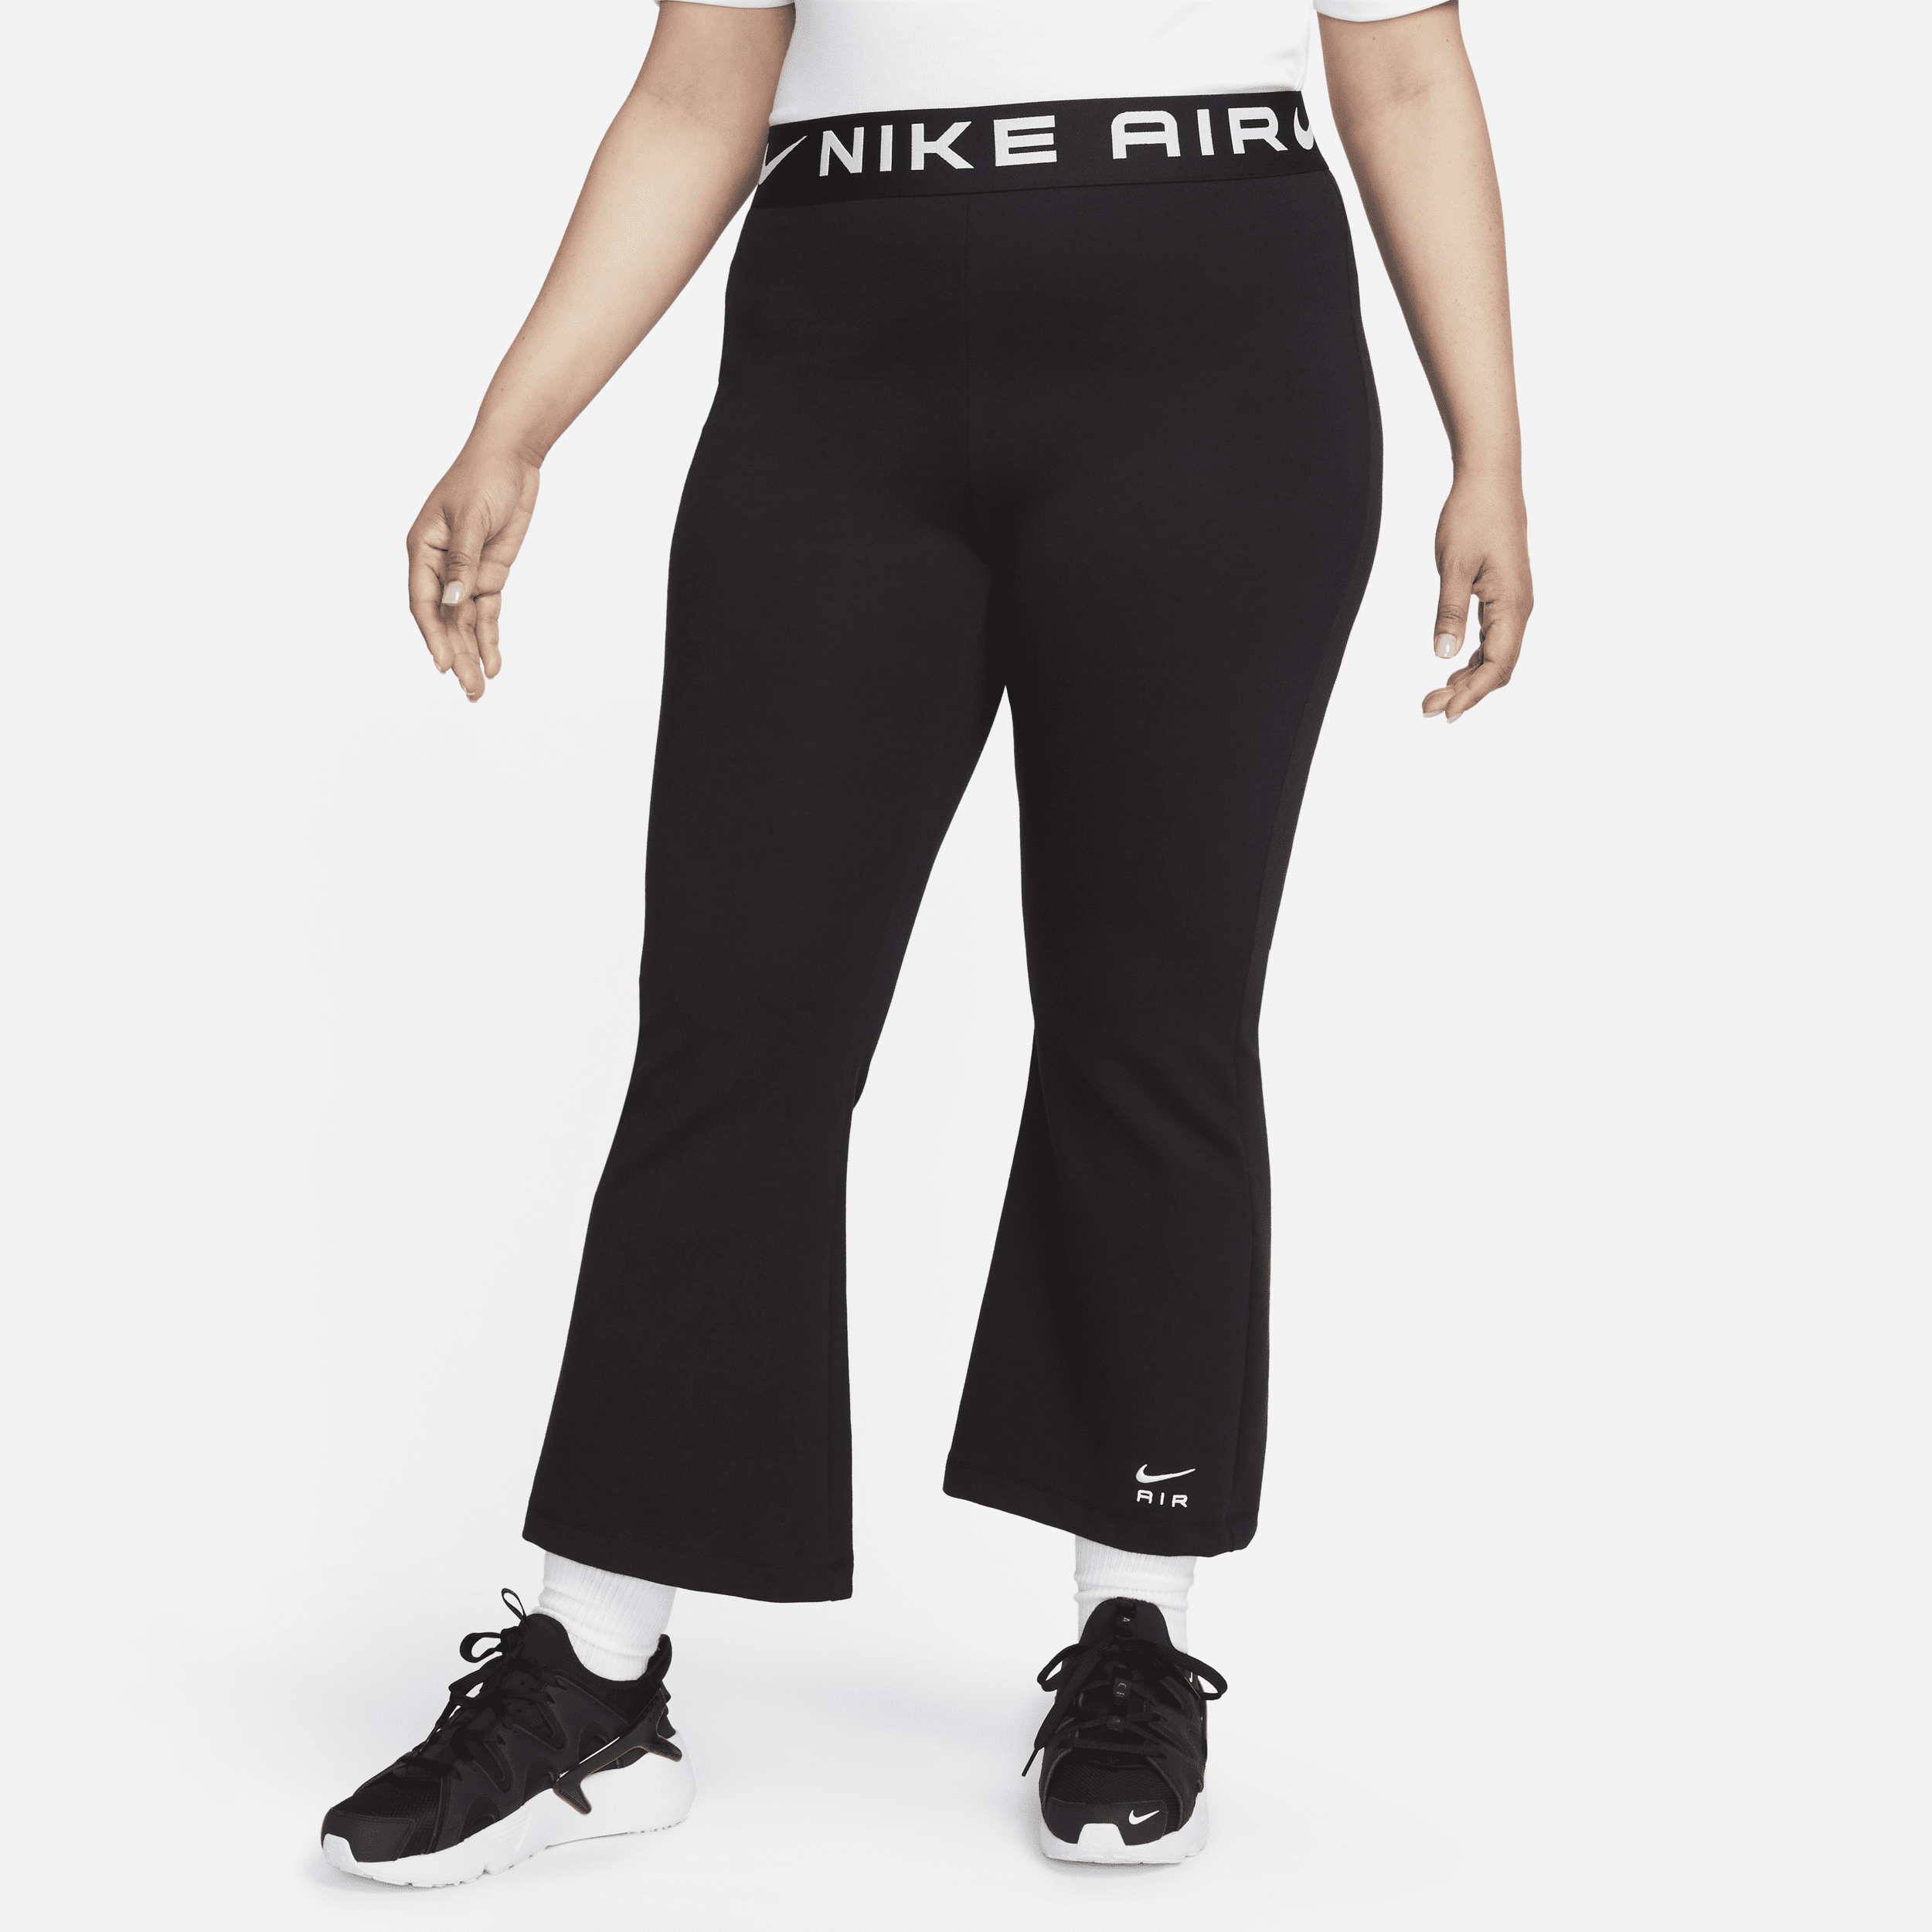 Højtaljede Nike Sportswear Air-leggings til kvinder (plus size) - sort